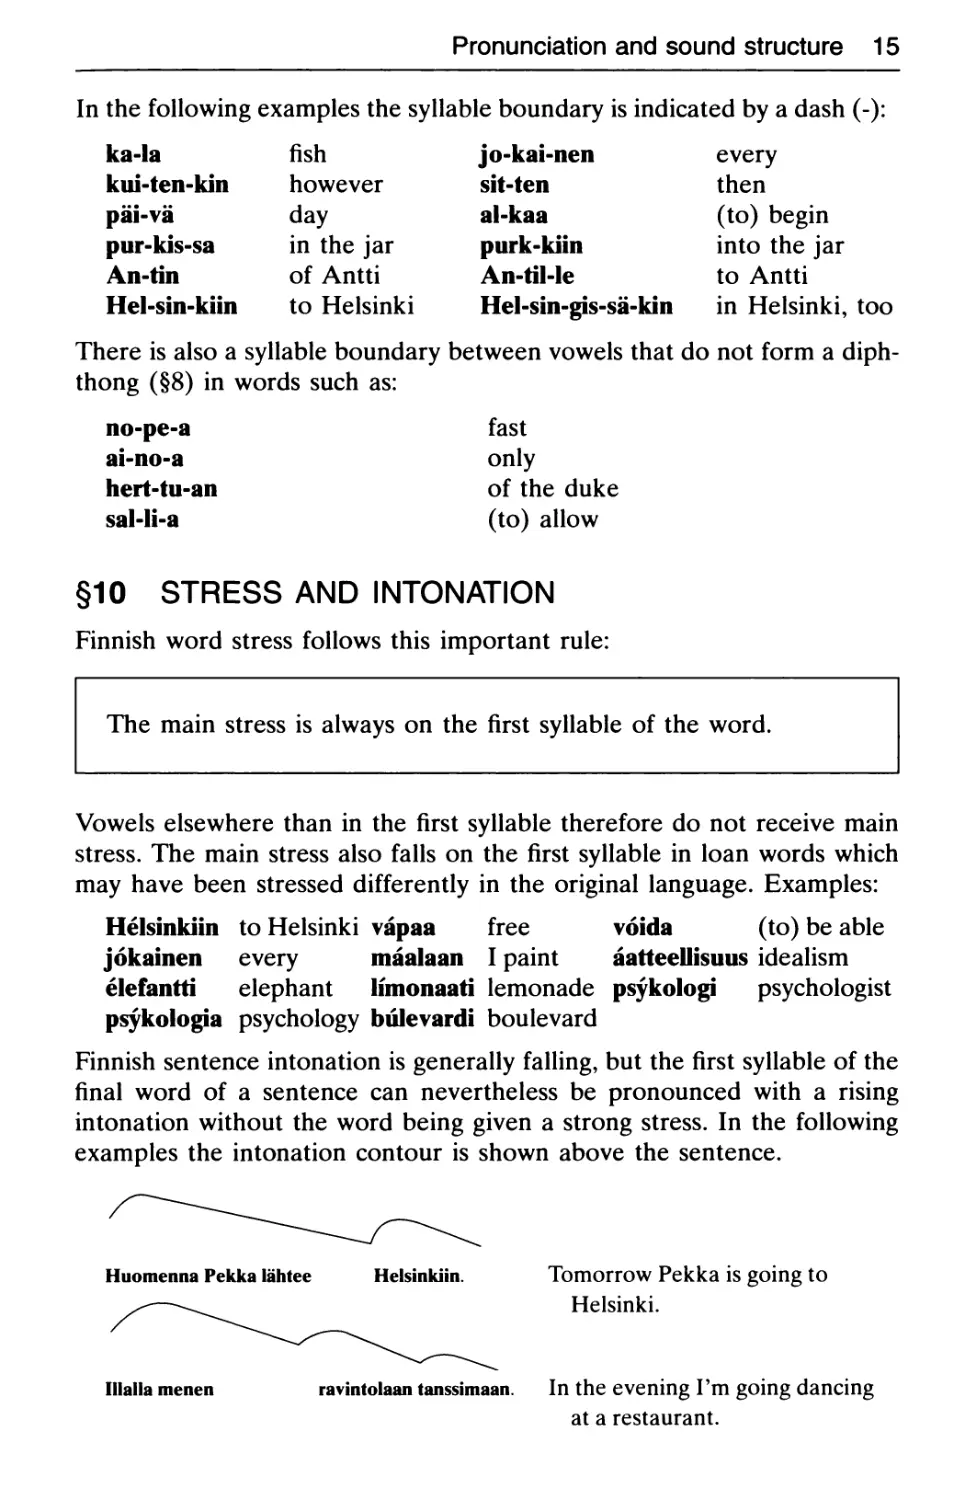 §10 Stress and intonation